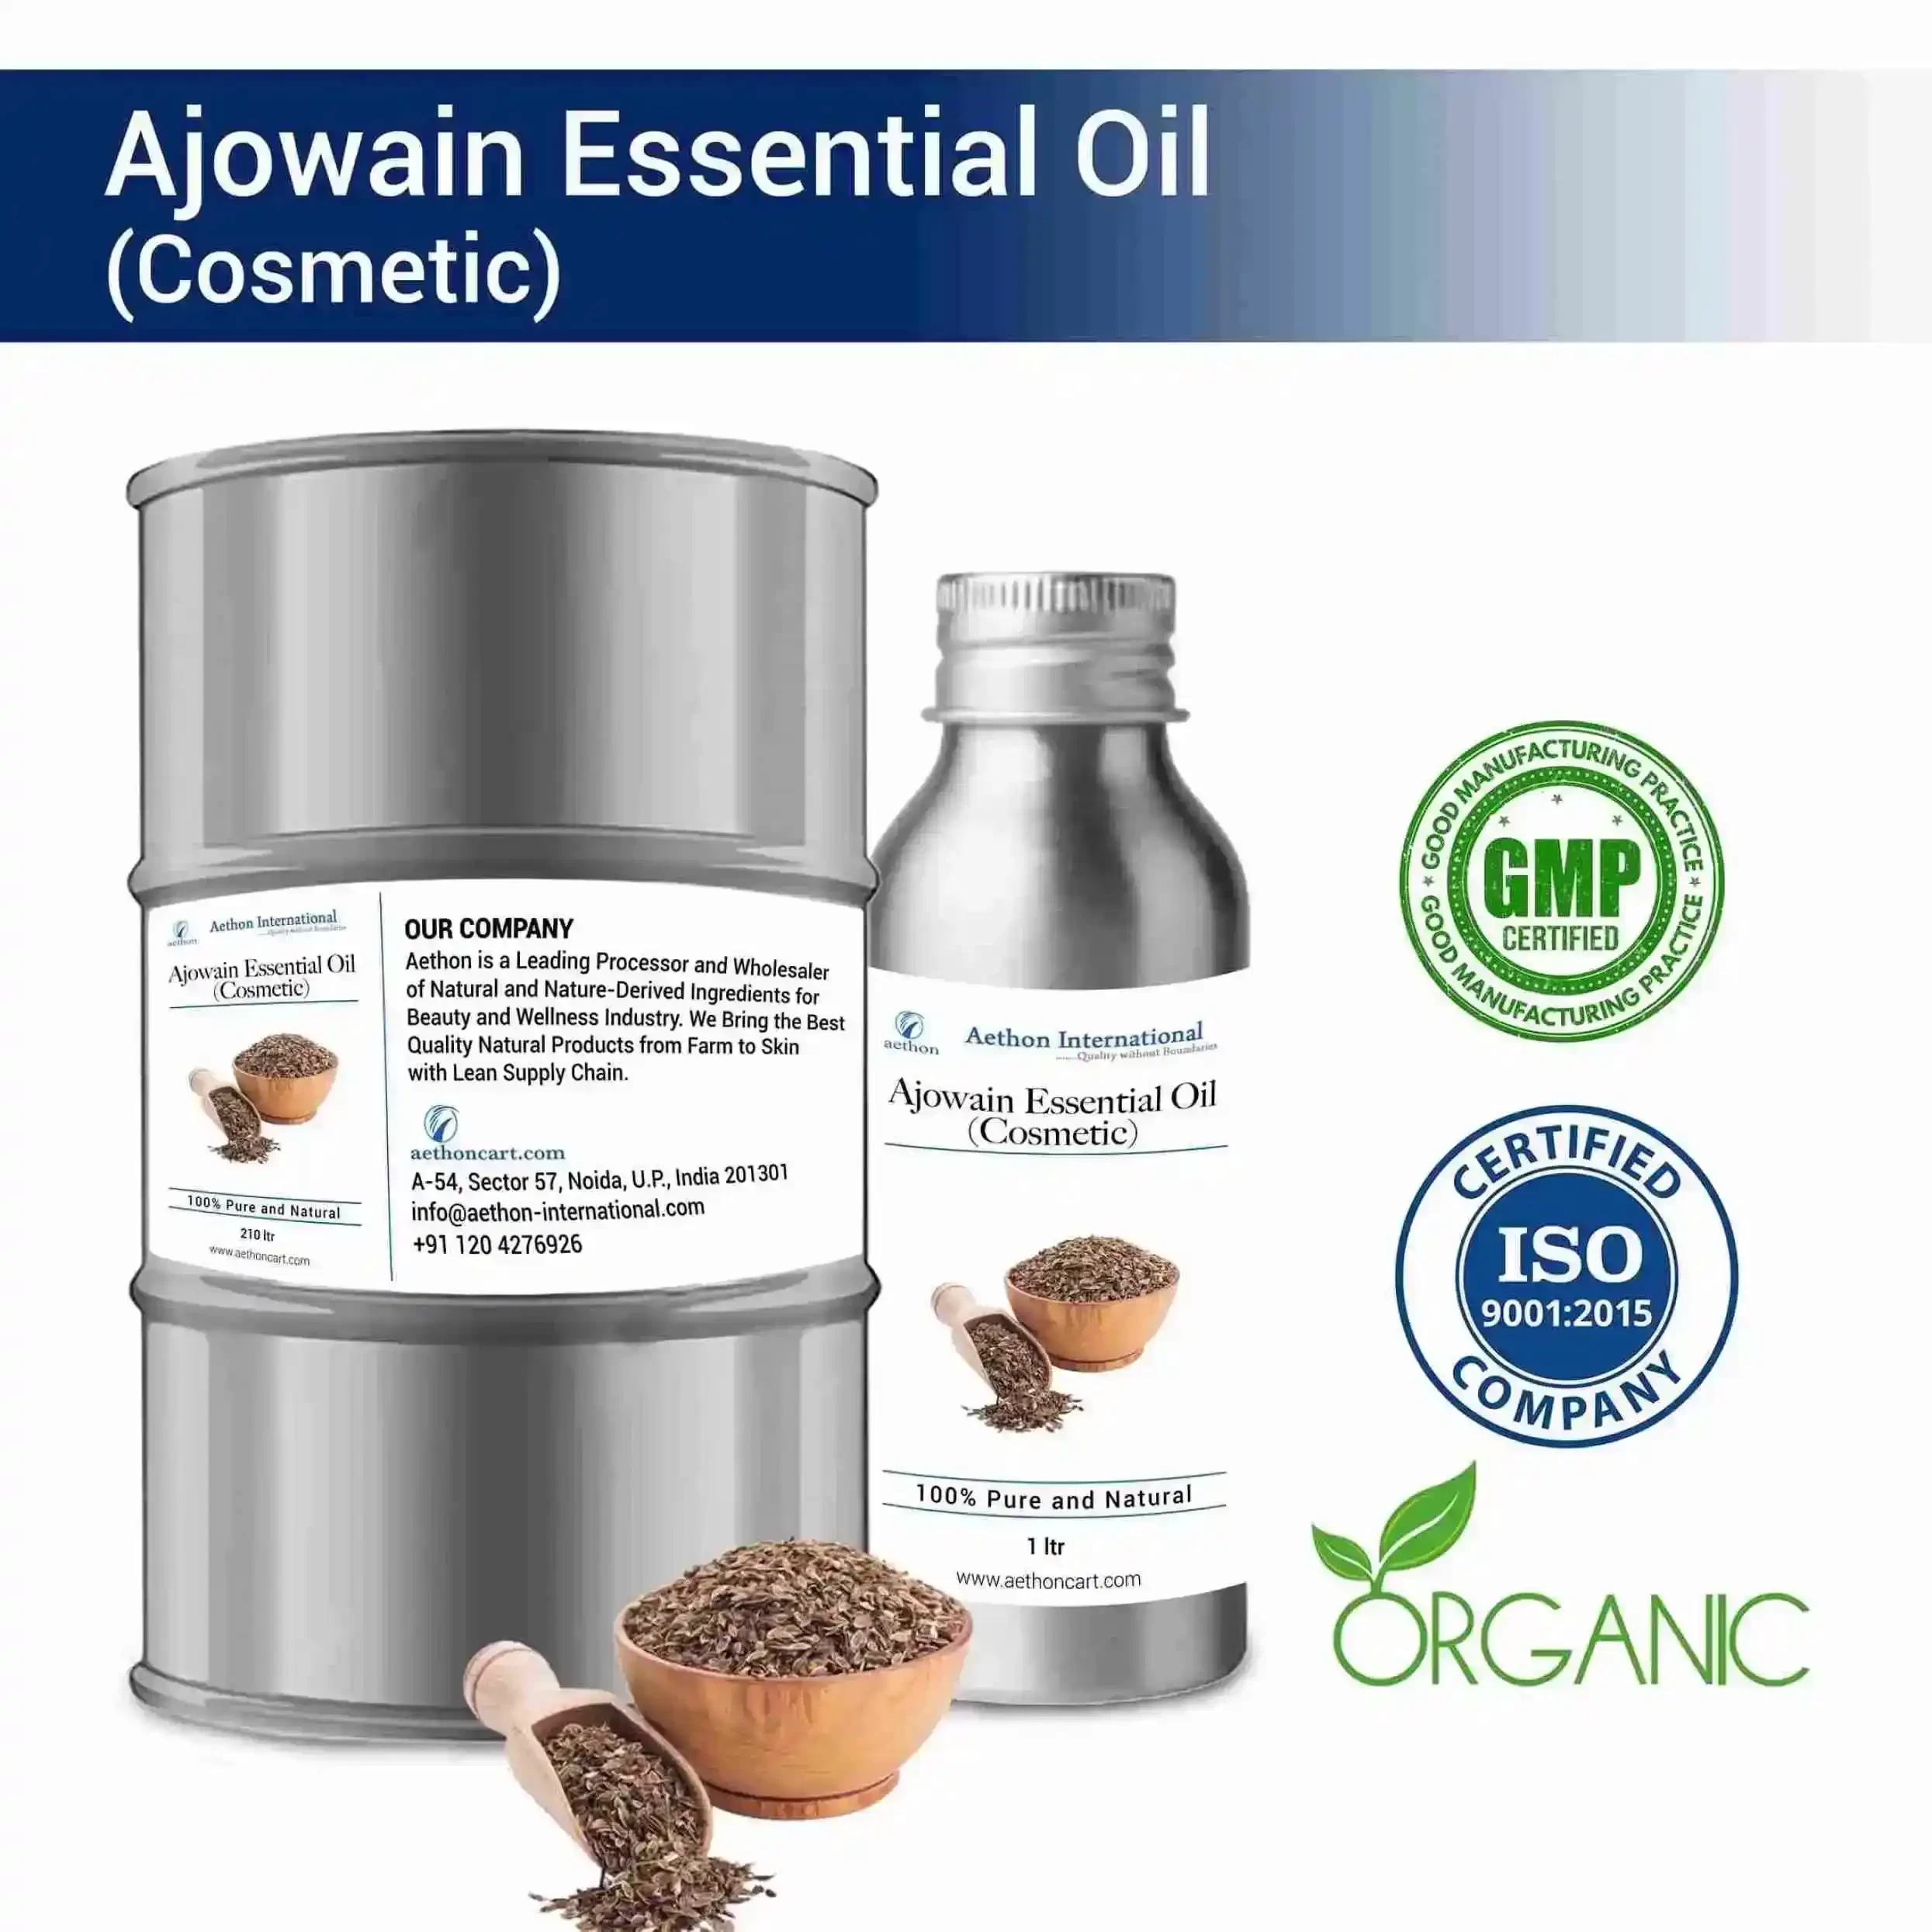 Ajowain Essential Oil (Cosmetic)